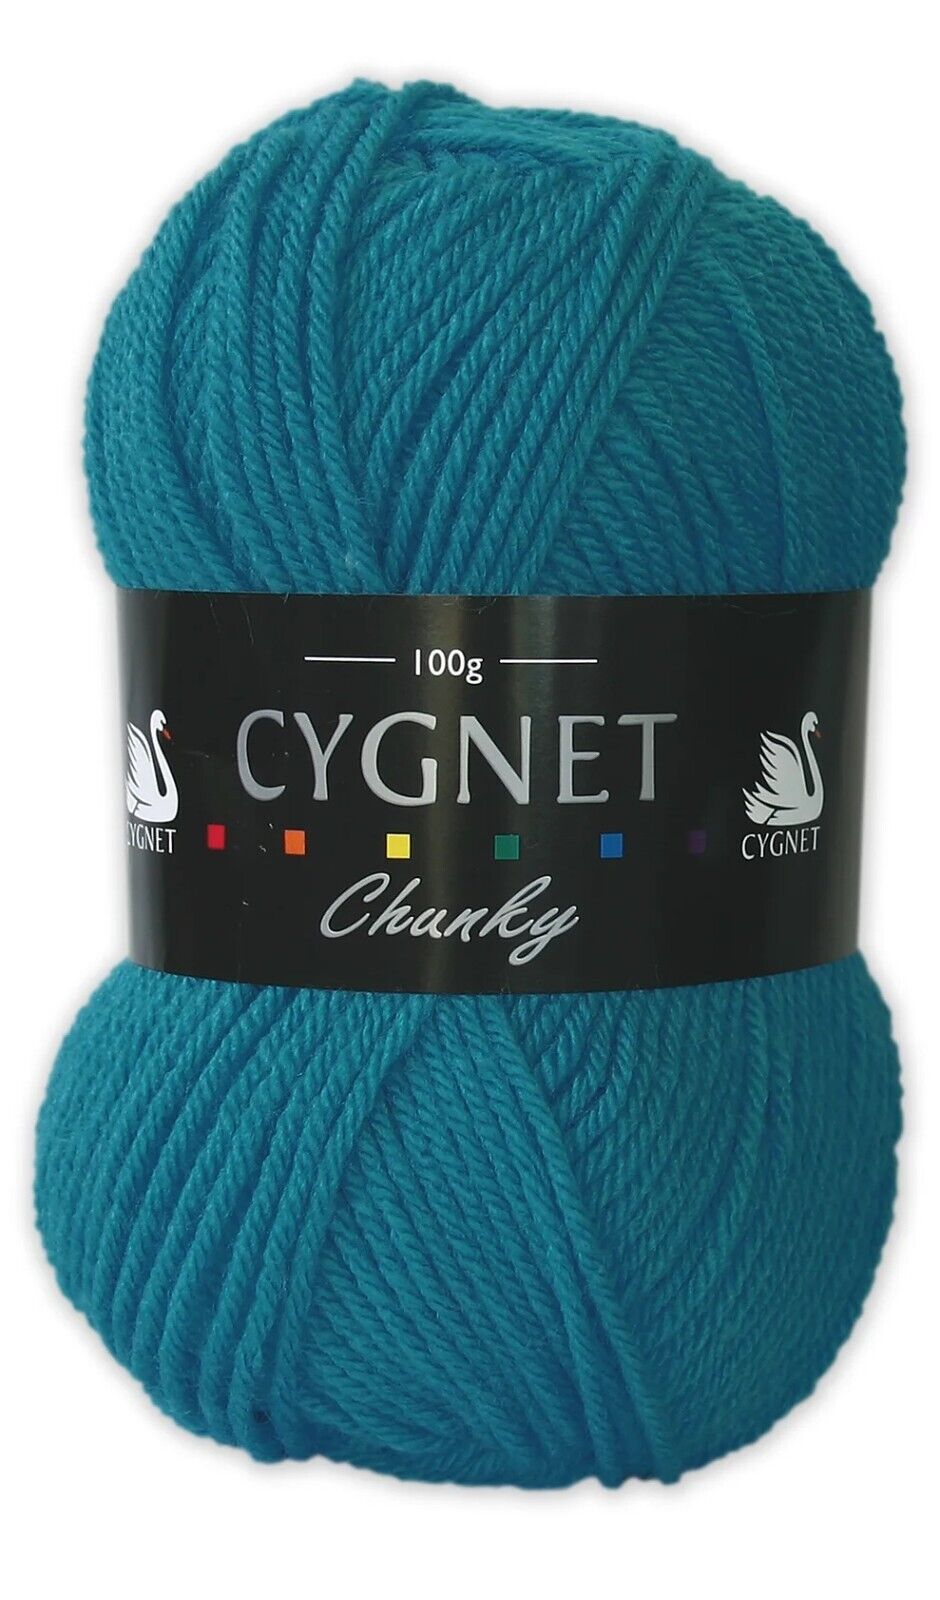 Cygnet CHUNKY Knitting Yarn / Wool - 100g Chunky Knit Ball - Turquoise